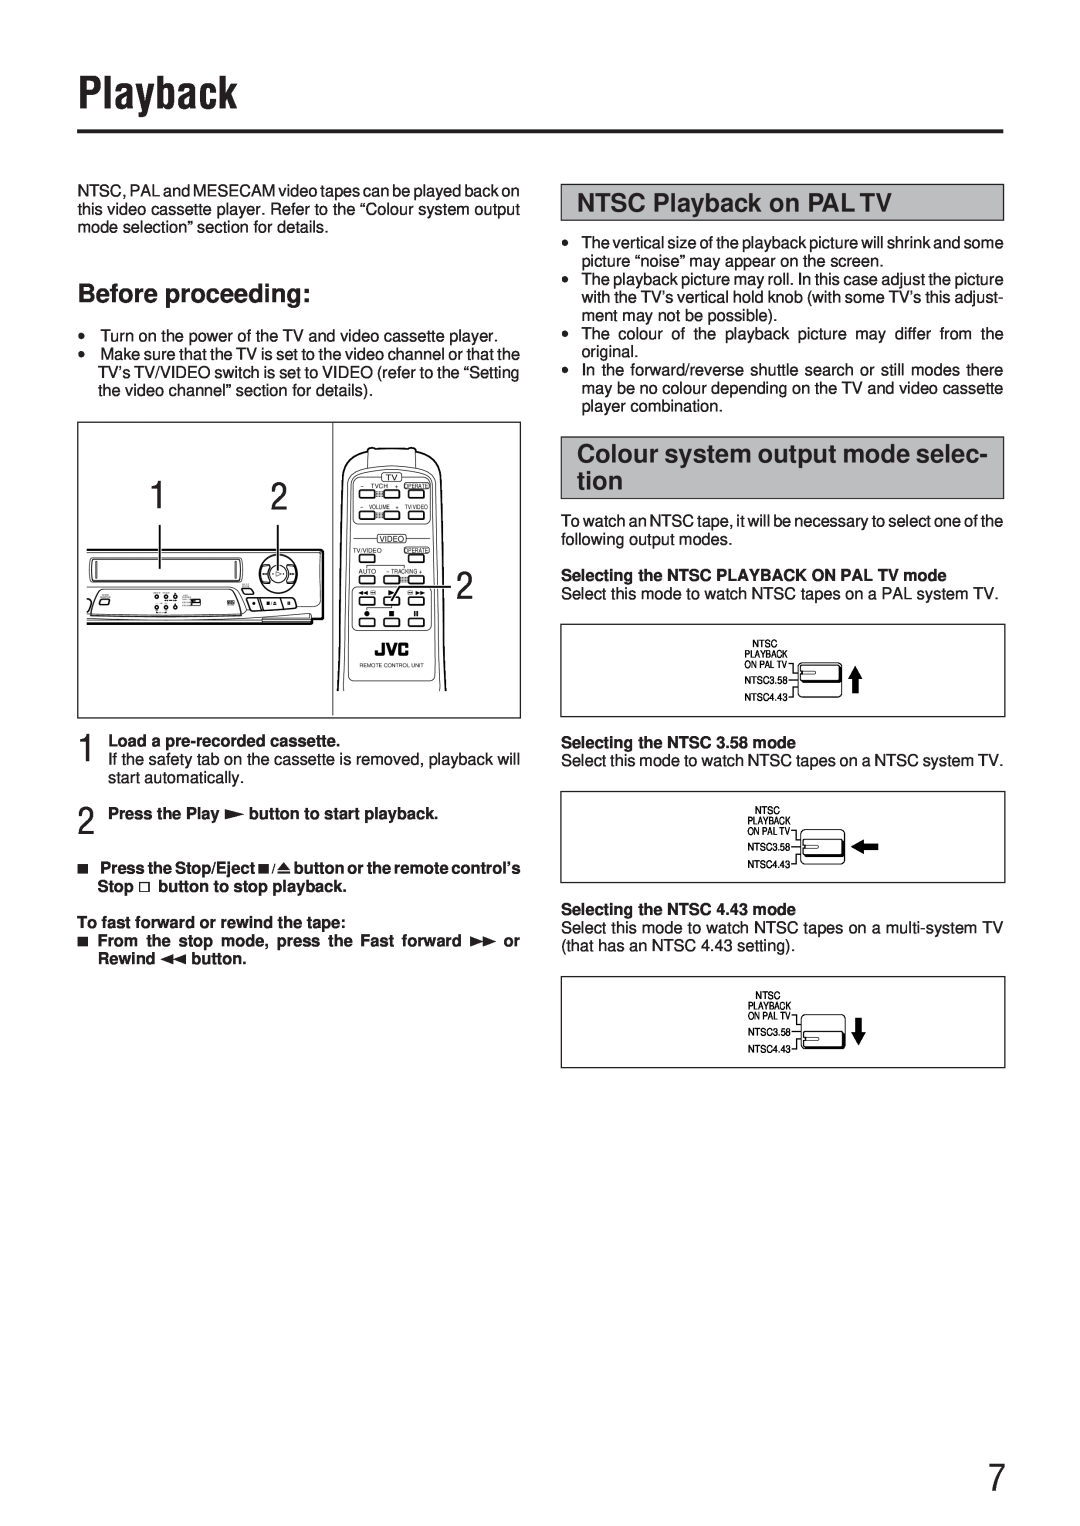 JVC HR-P82A manual Before proceeding, NTSC Playback on PAL TV, Colour system output mode selec- tion 